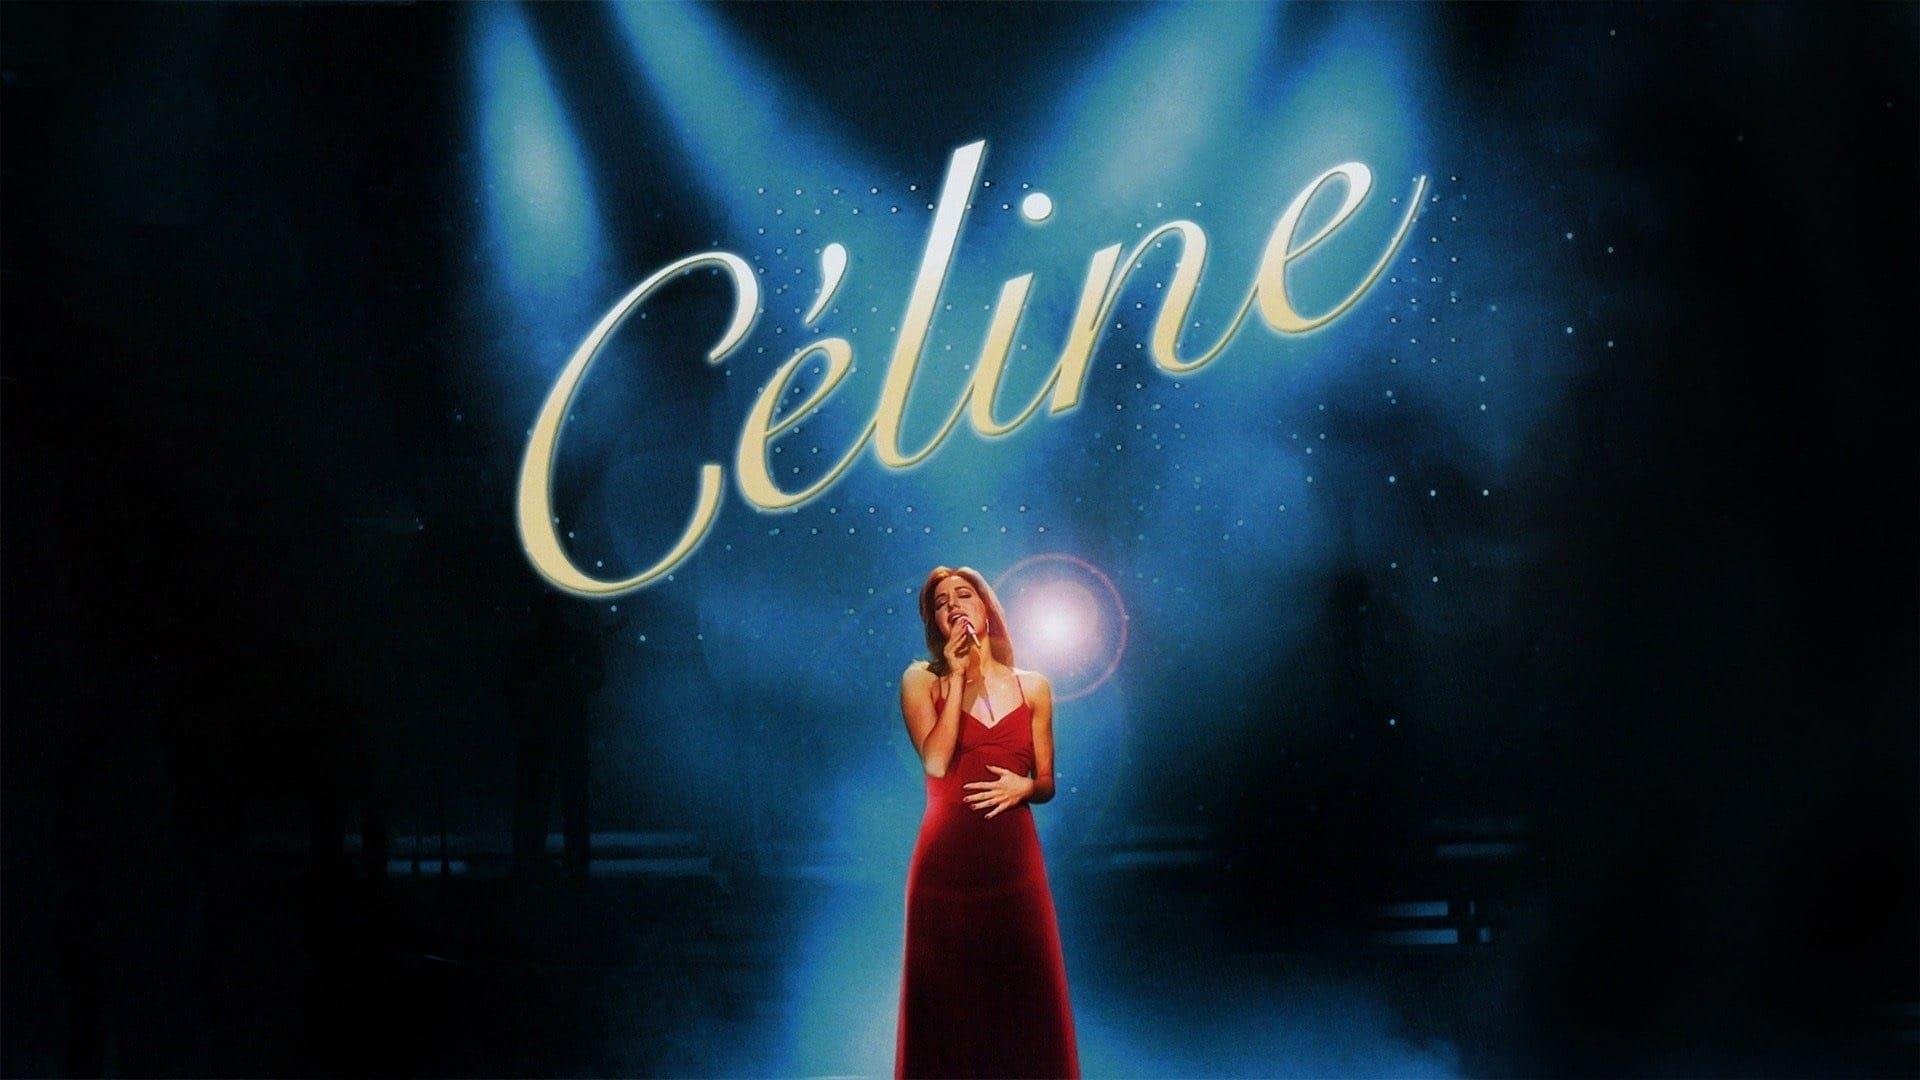 Céline backdrop